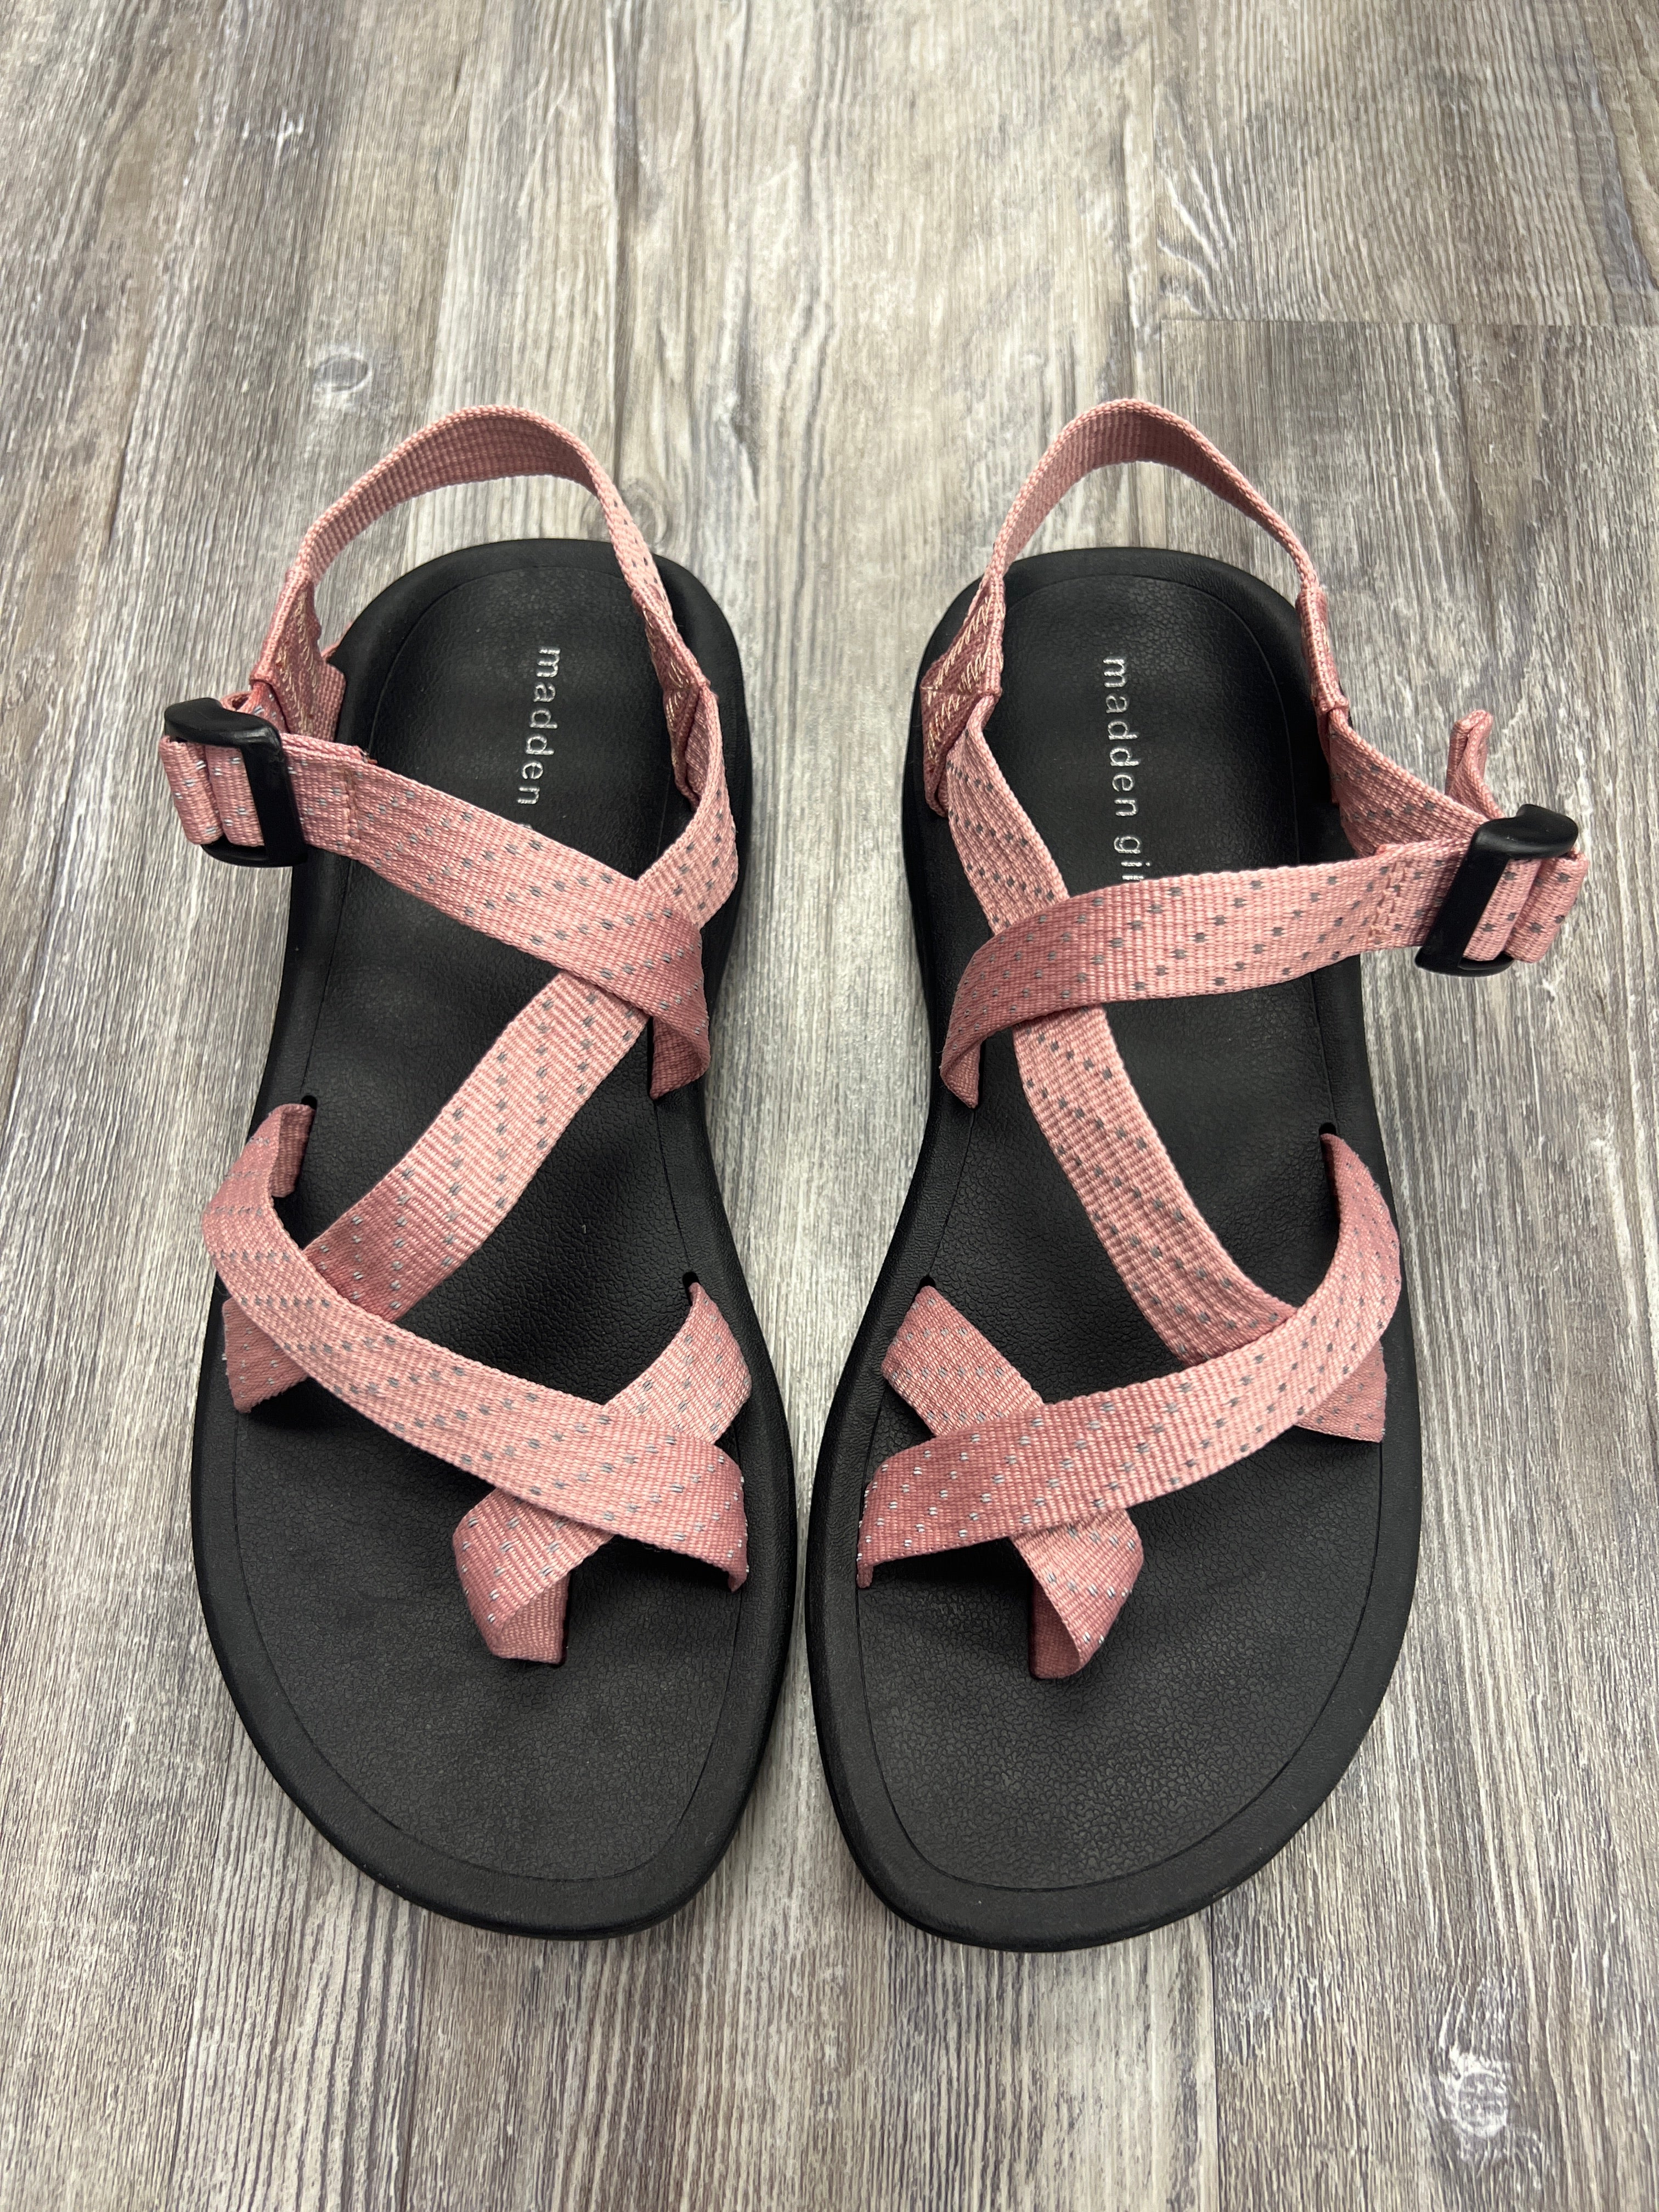 Madden Girl Sandals Shoes for Girls Sizes 2T-5T | Mercari